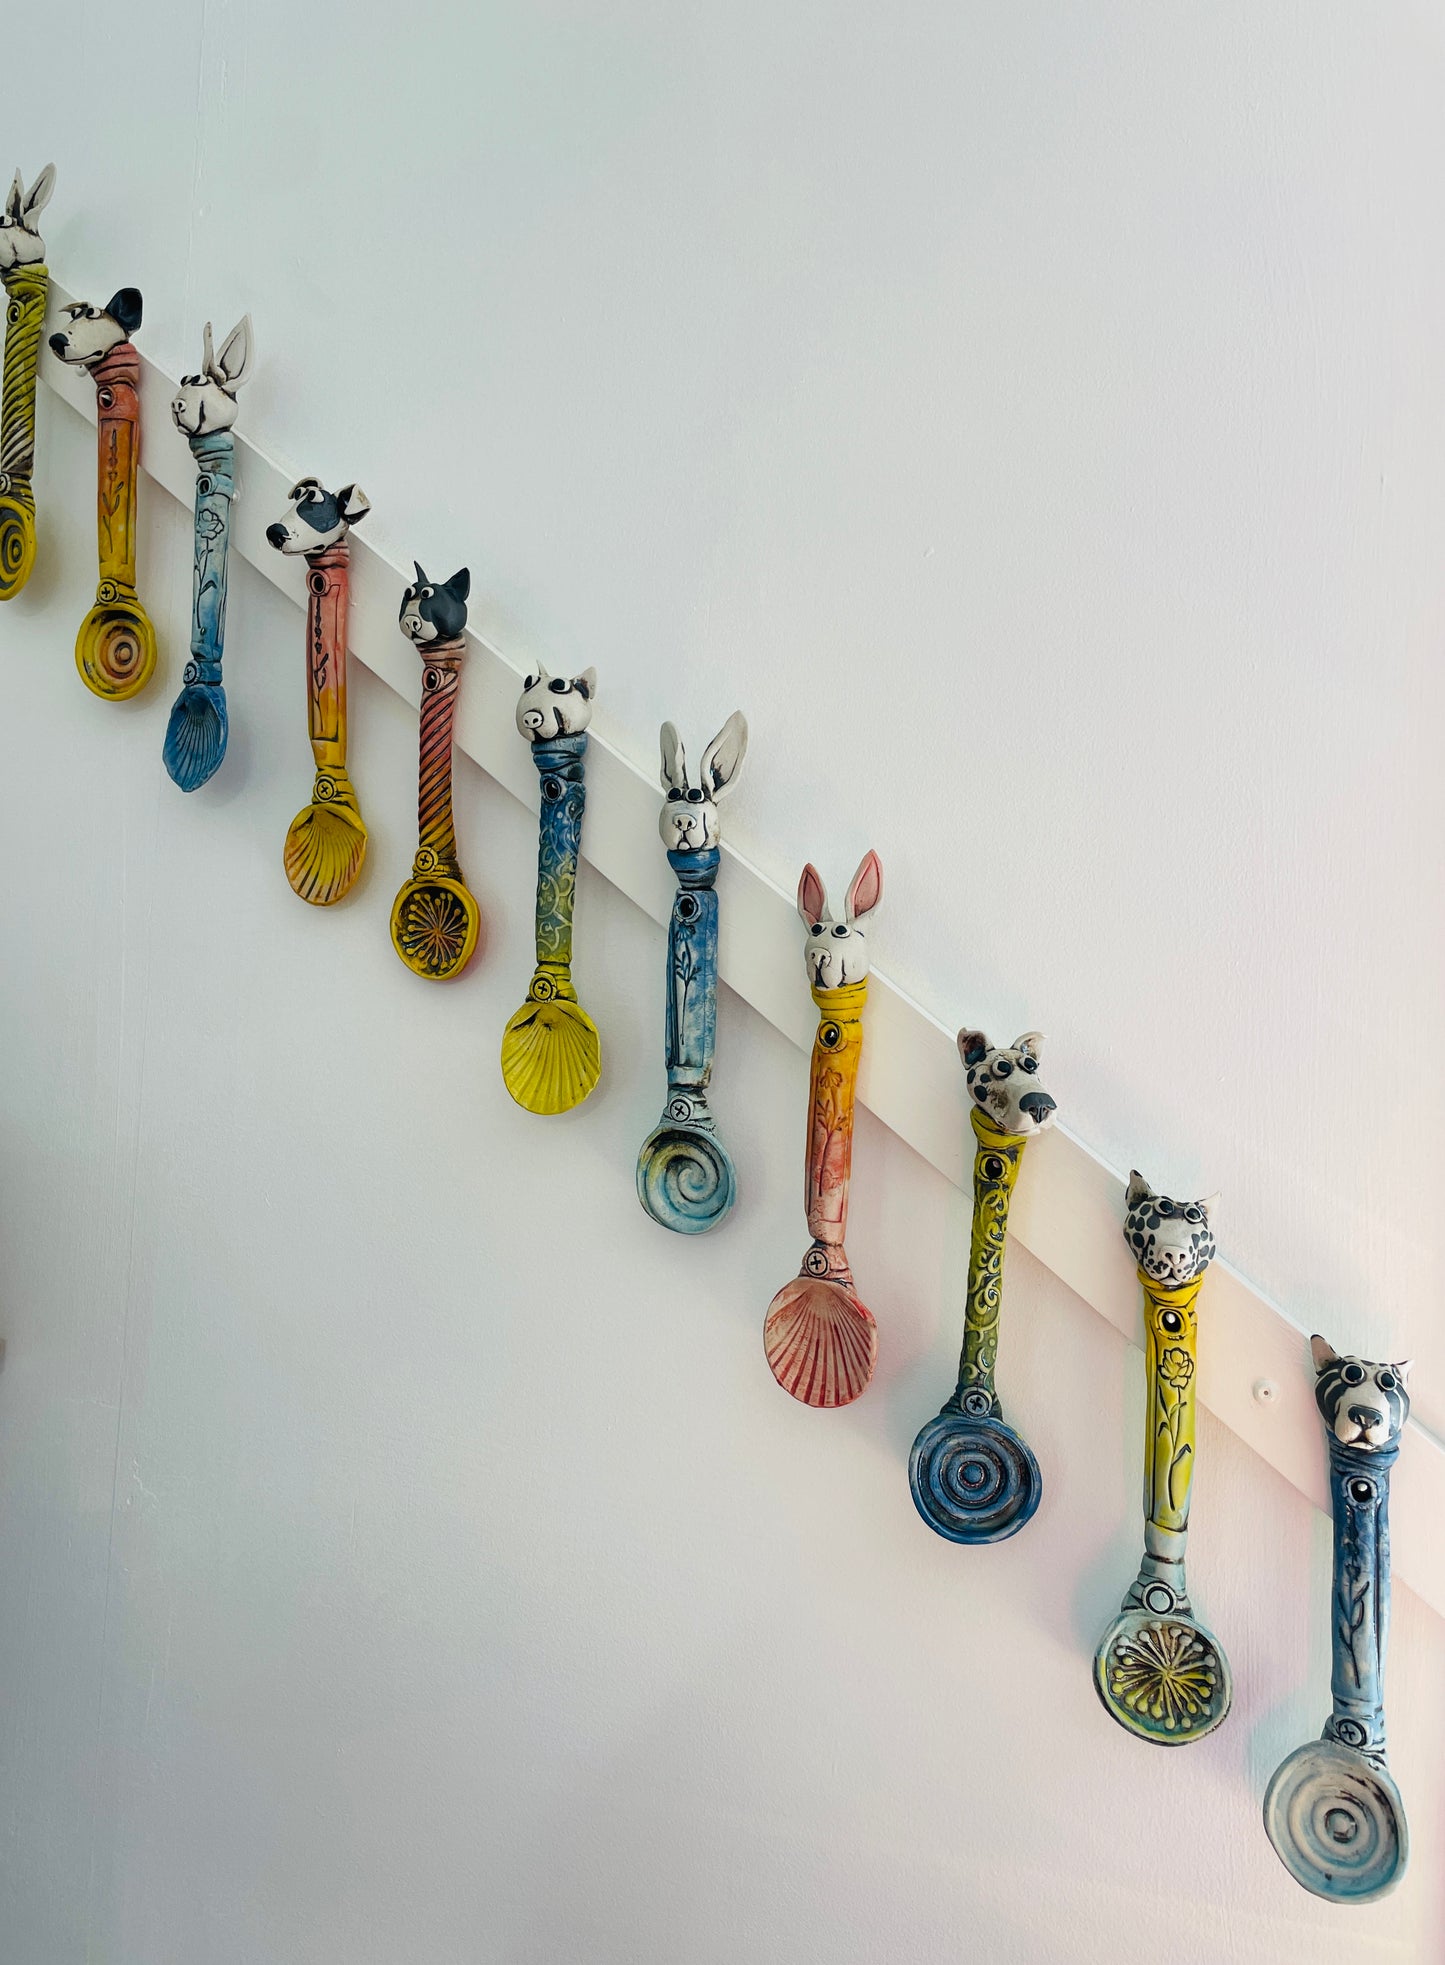 Fiona Tunnicliffe Decorative Spoon - spotty dog plus spiral